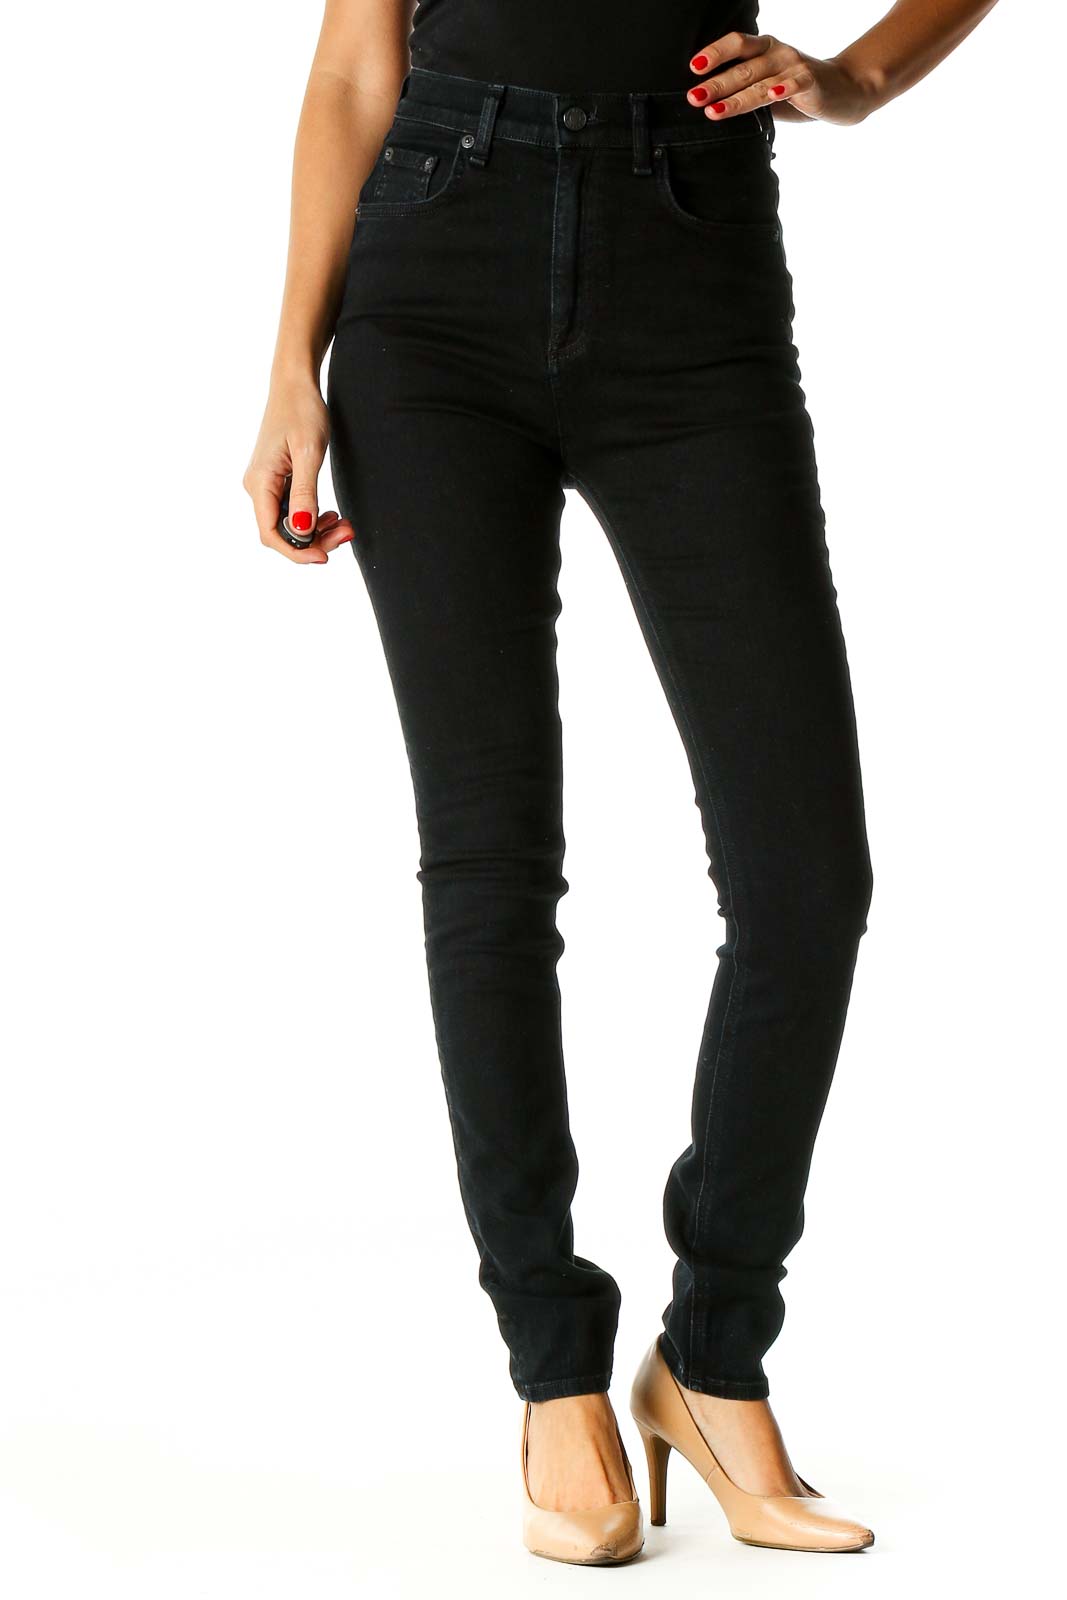 Black Skinny Jeans Front